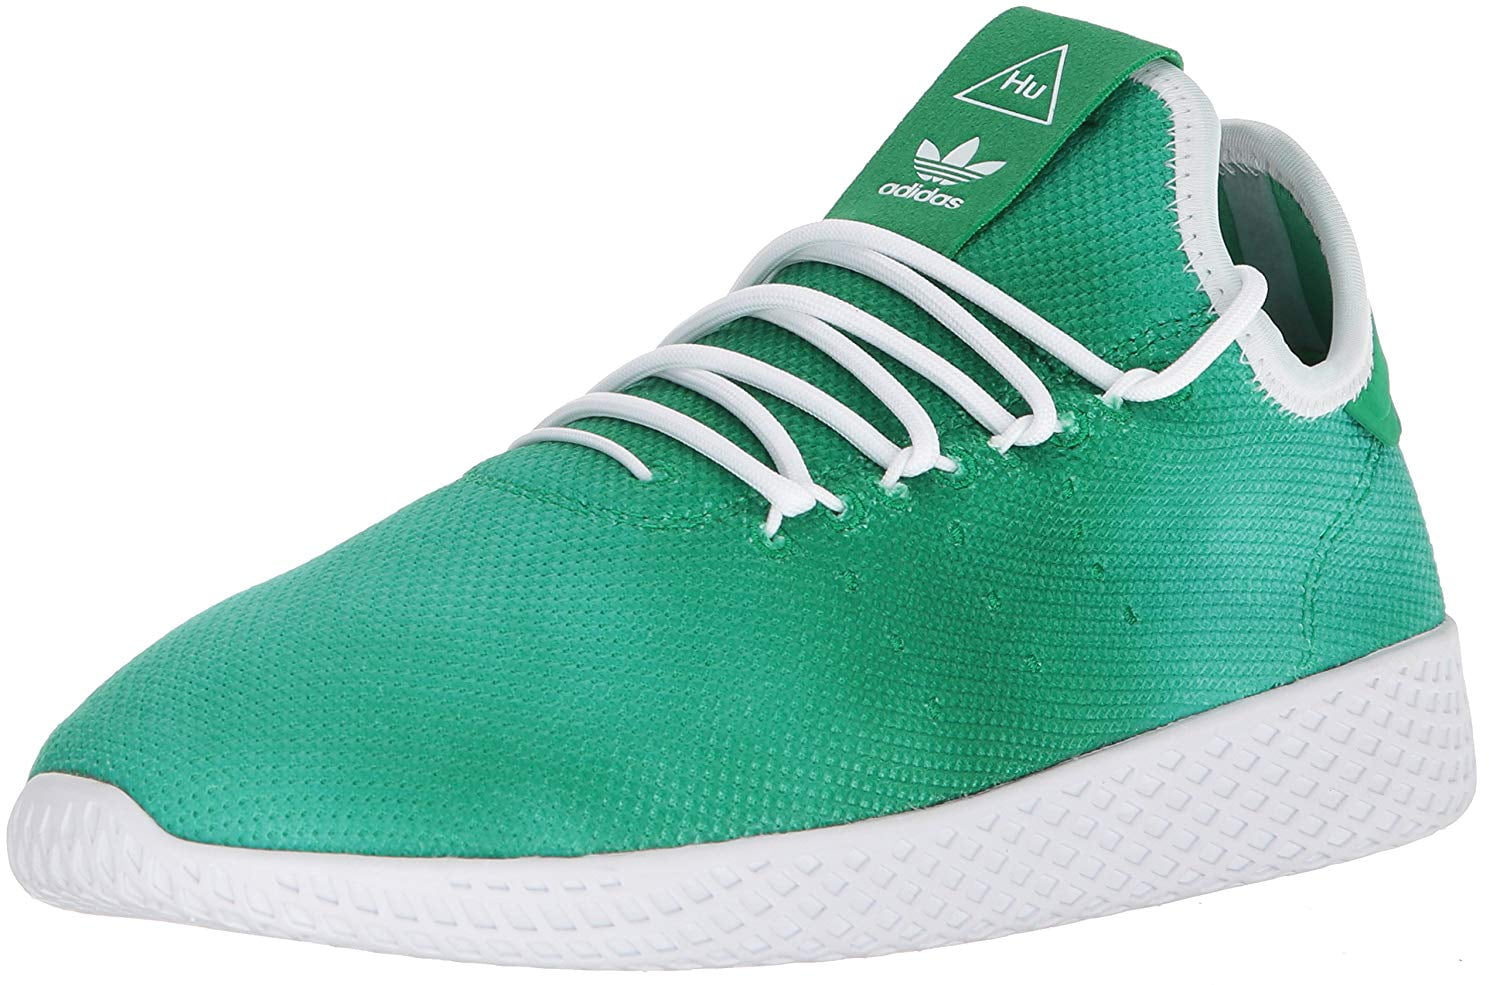 pharrell williams shoes green